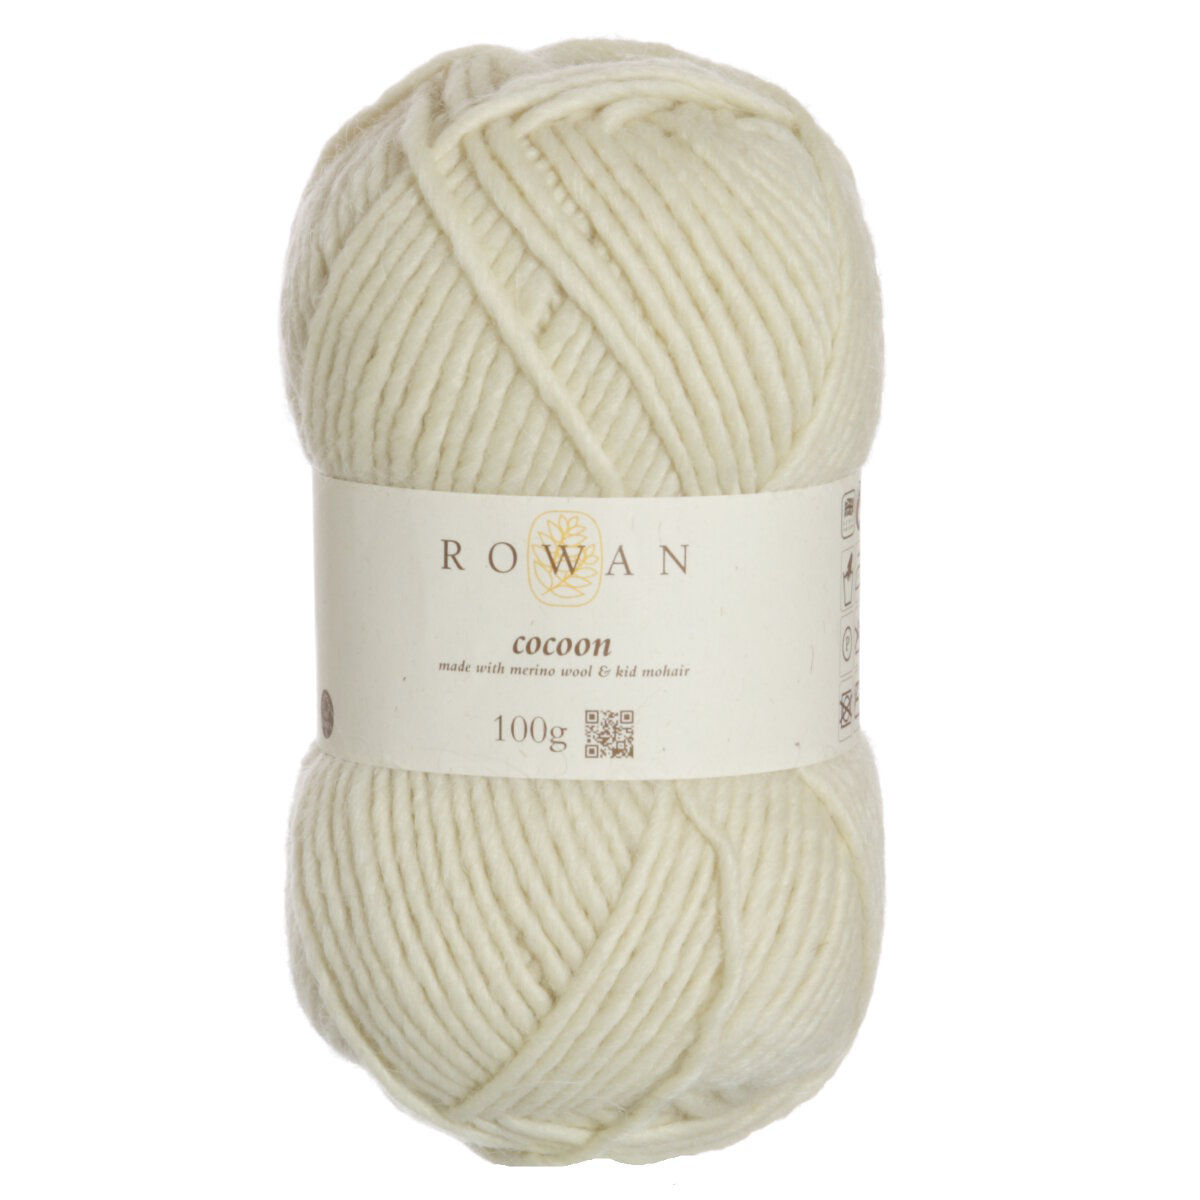 Rowan Cocoon Yarn - 801 - Polar at Jimmy Beans Wool